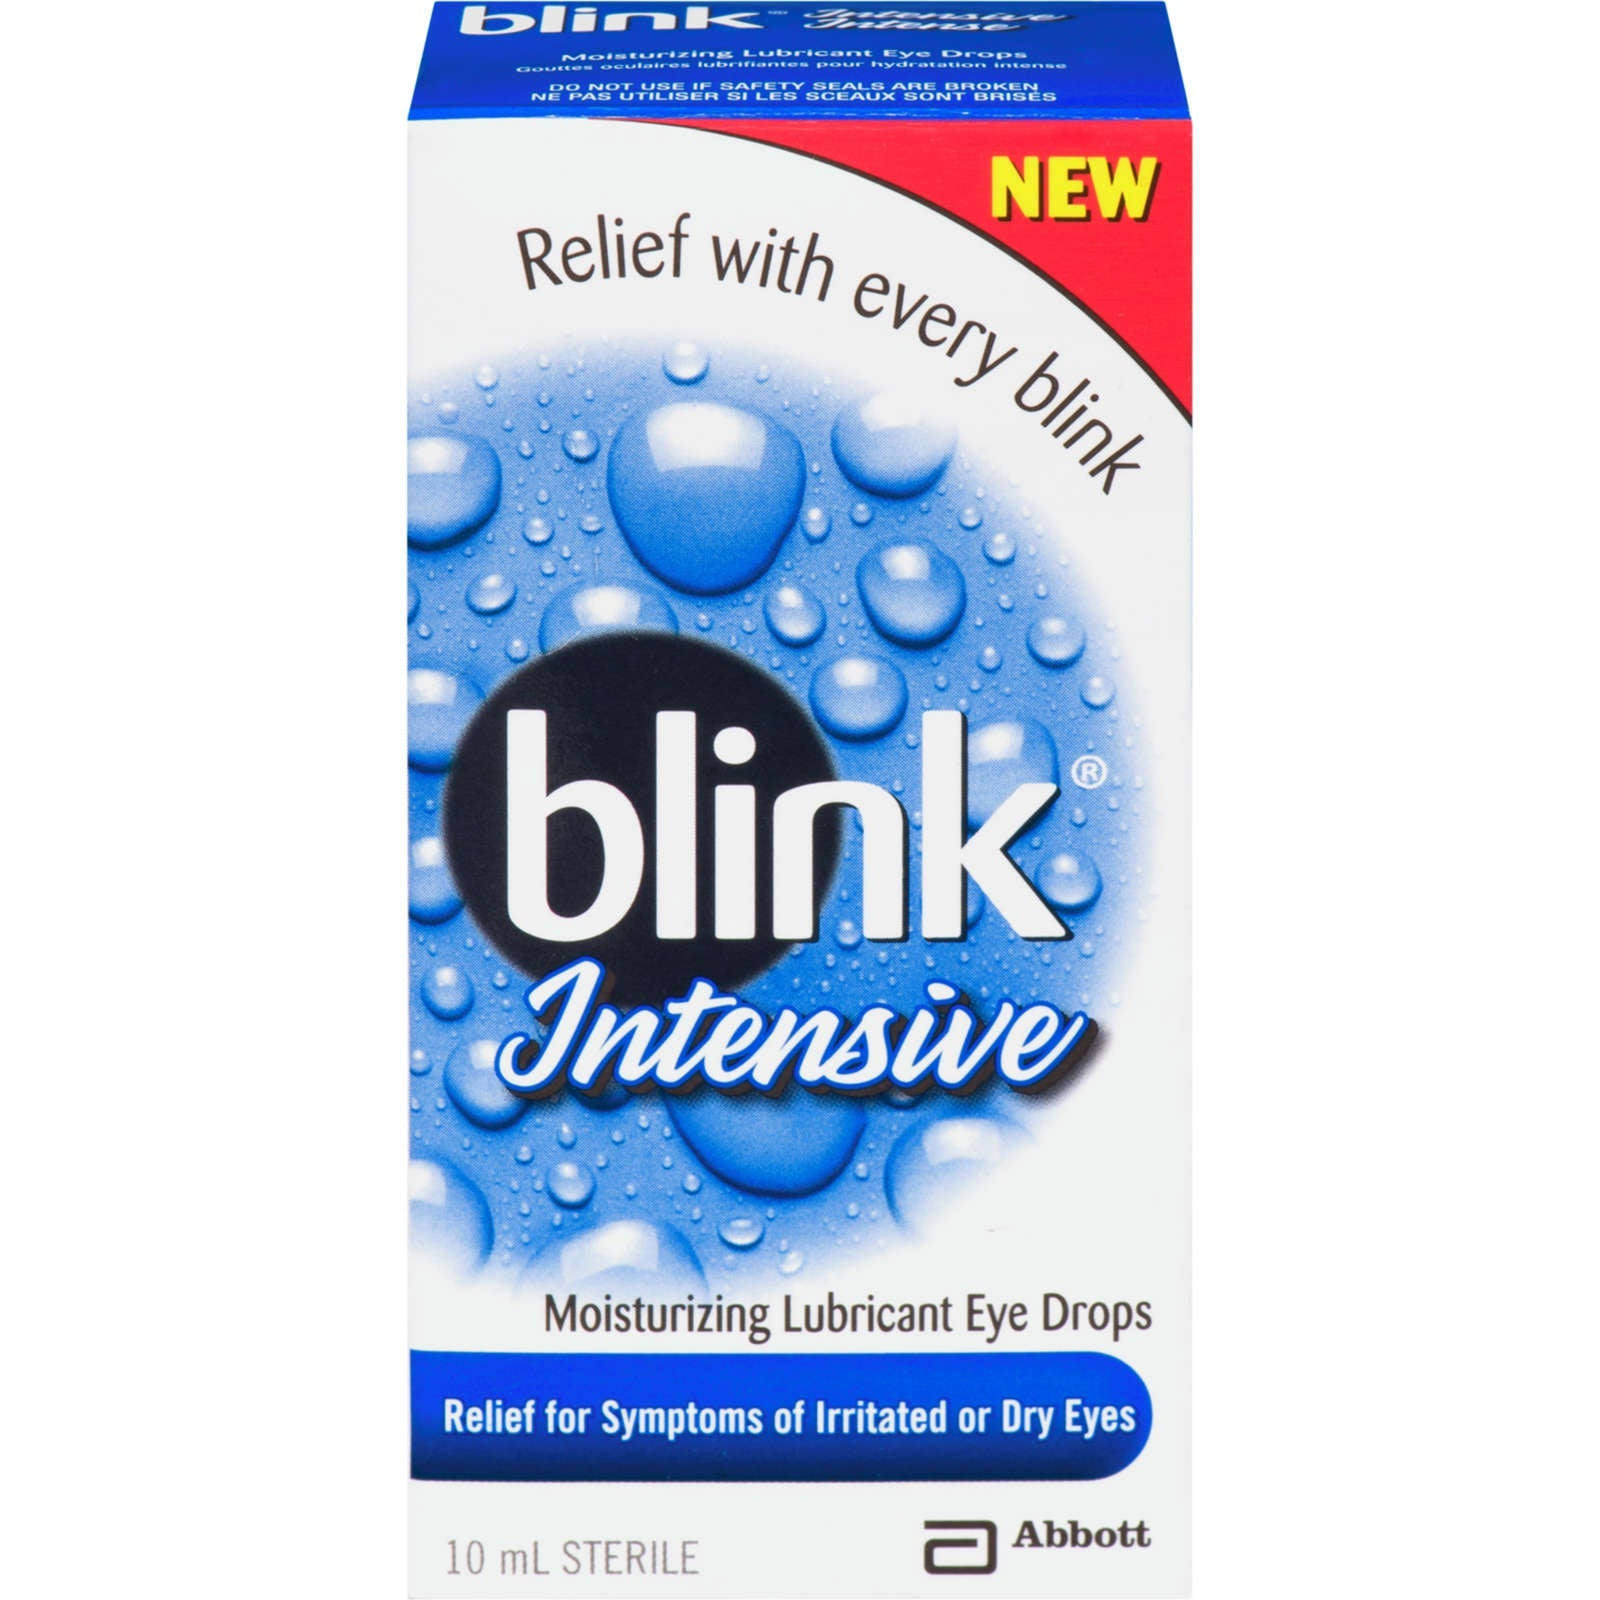 Blink Intensive Moisturizing Lubricant Eye Drops - 10ml